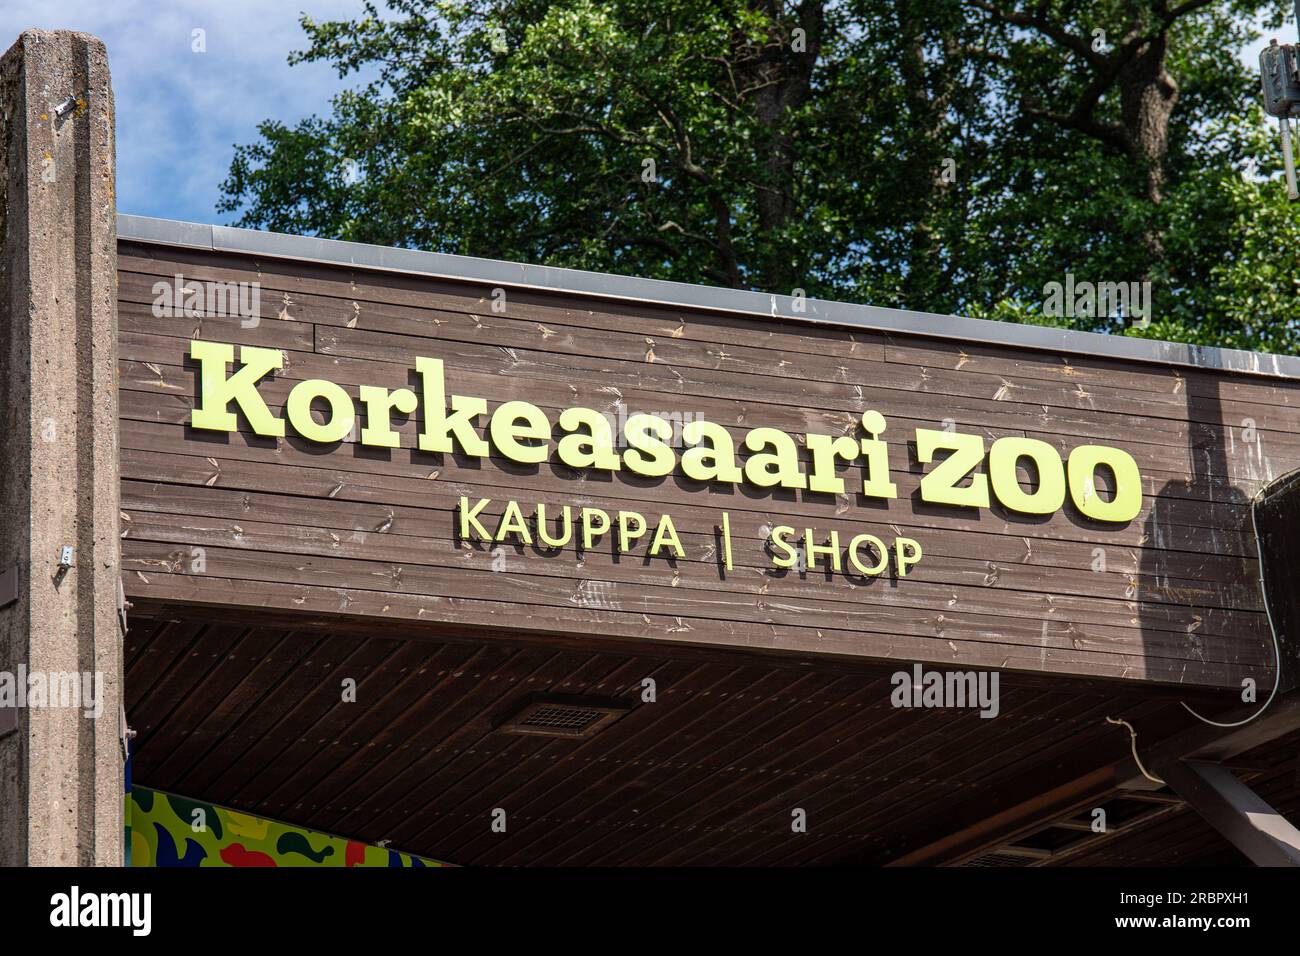 Korkeasaari Zoo shop in Helsinki, Finland Stock Photo